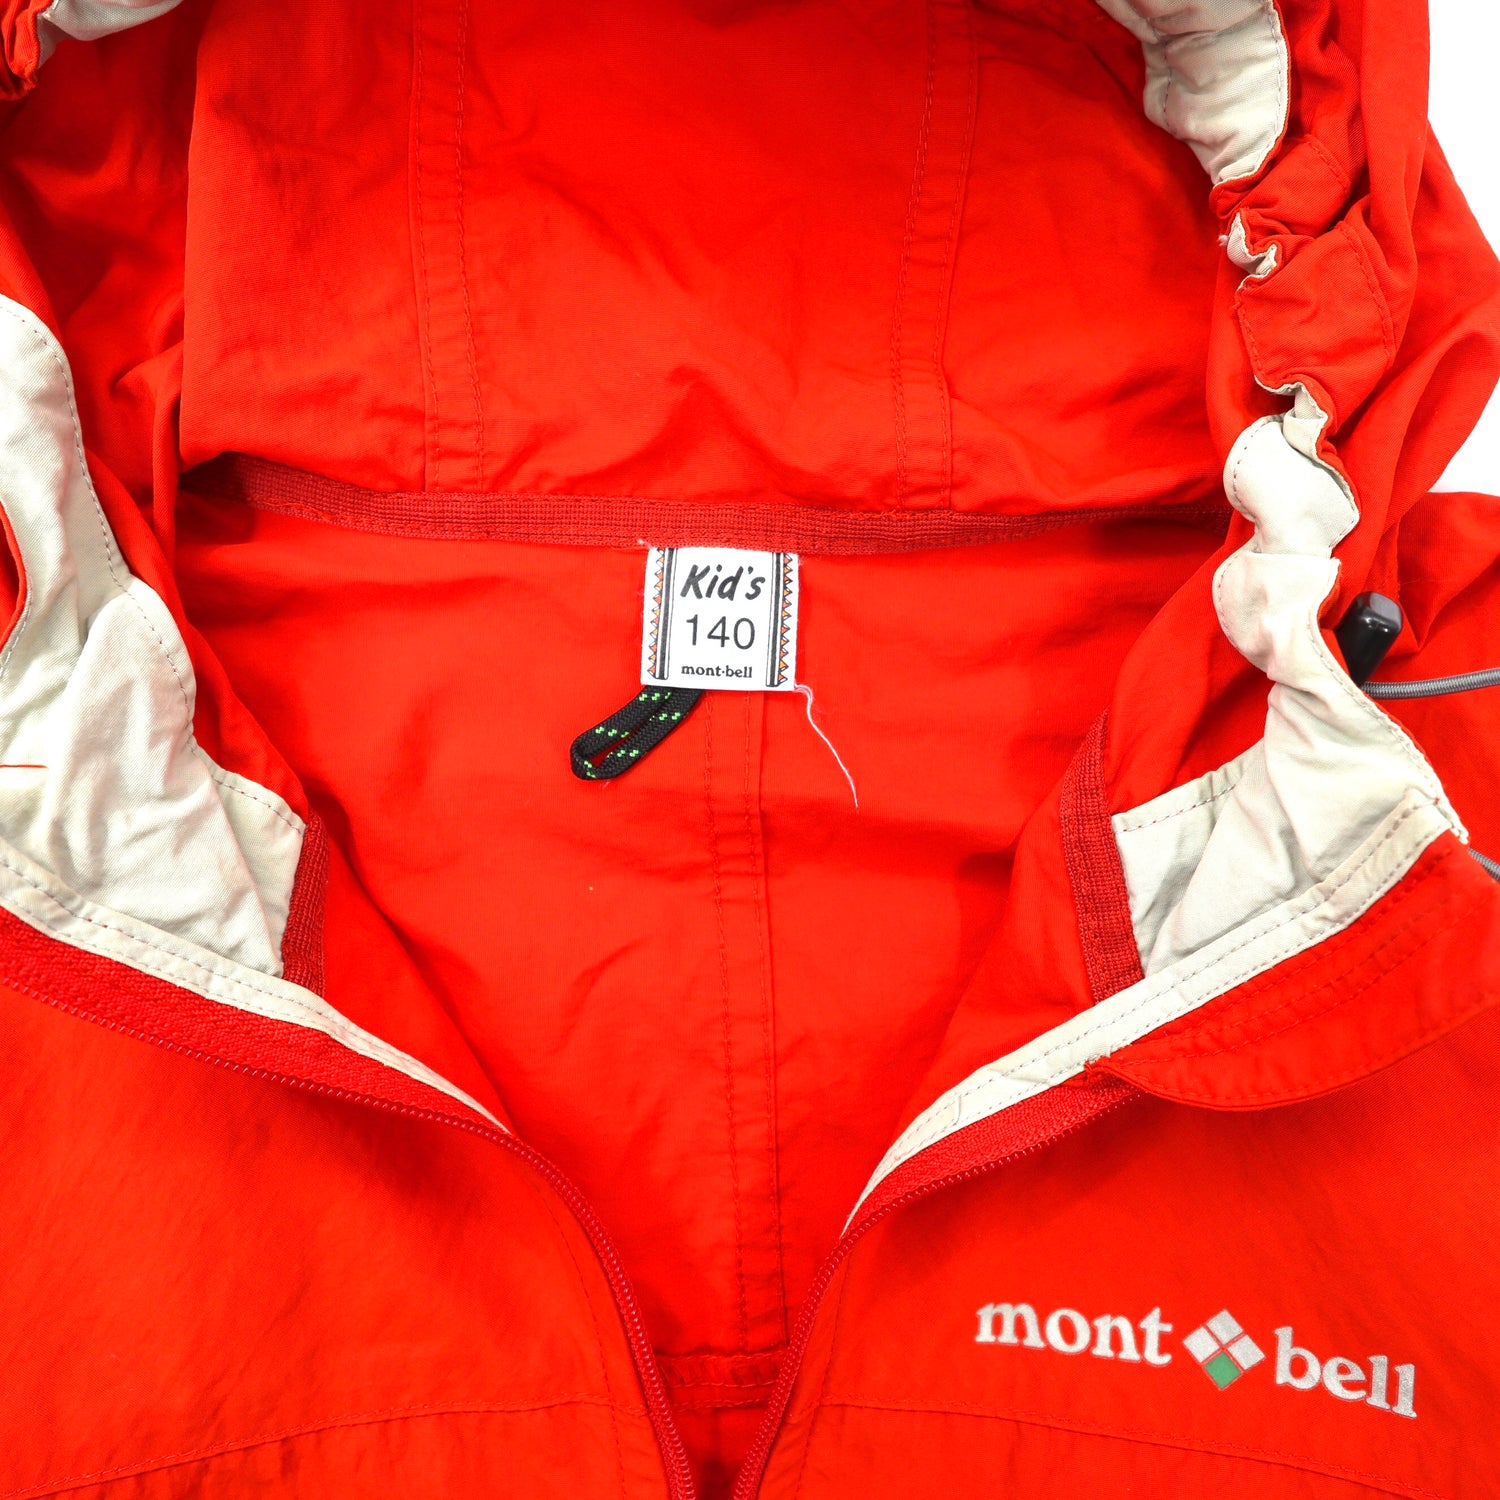 mont-bell 140 ナイロンパーカー - ジャケット